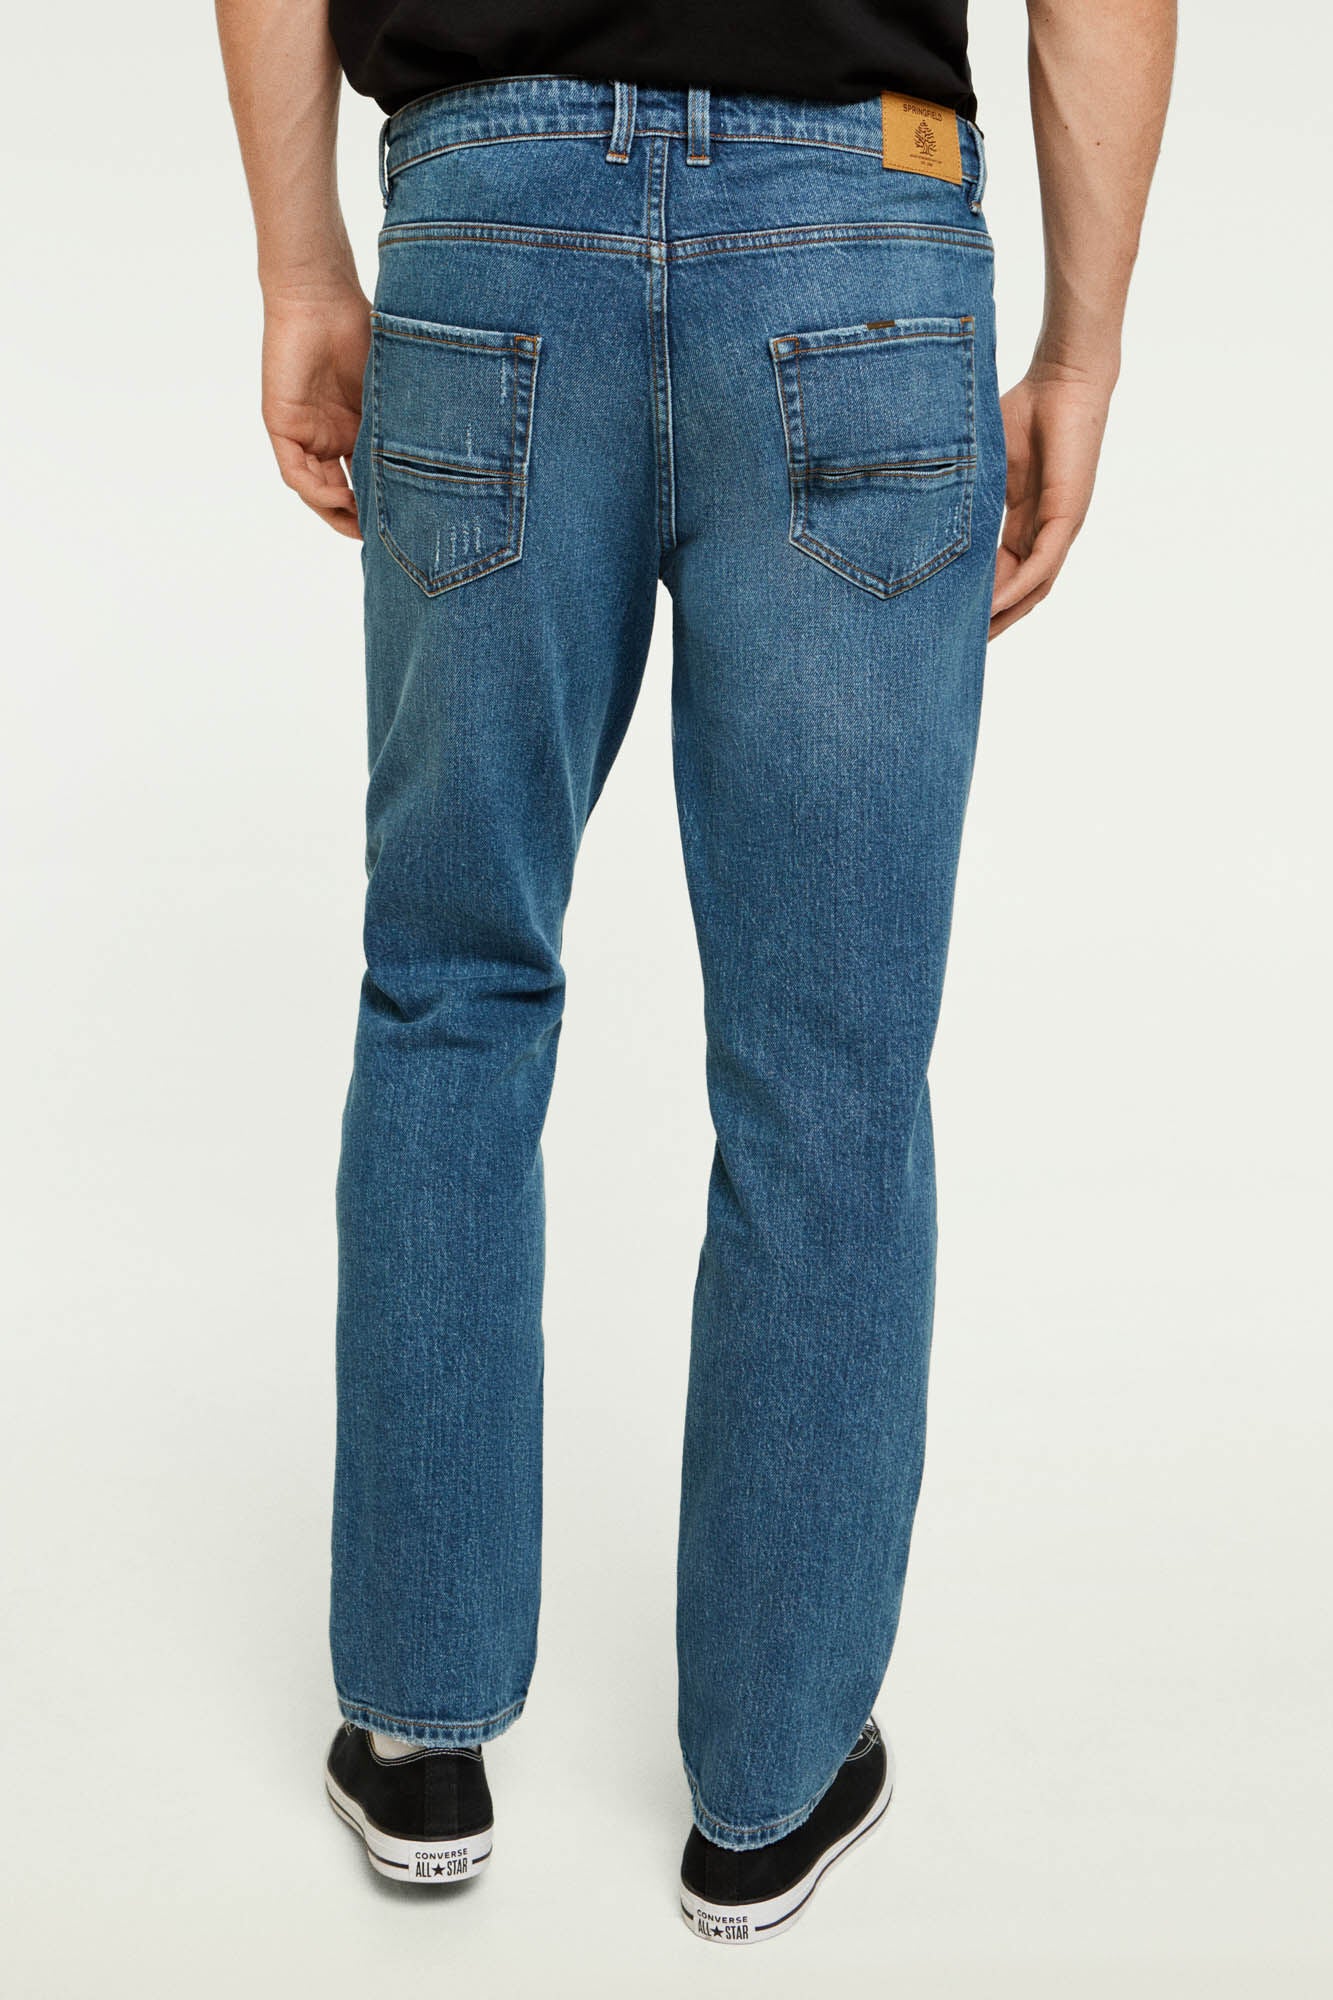 Medium wash regular fit jeans